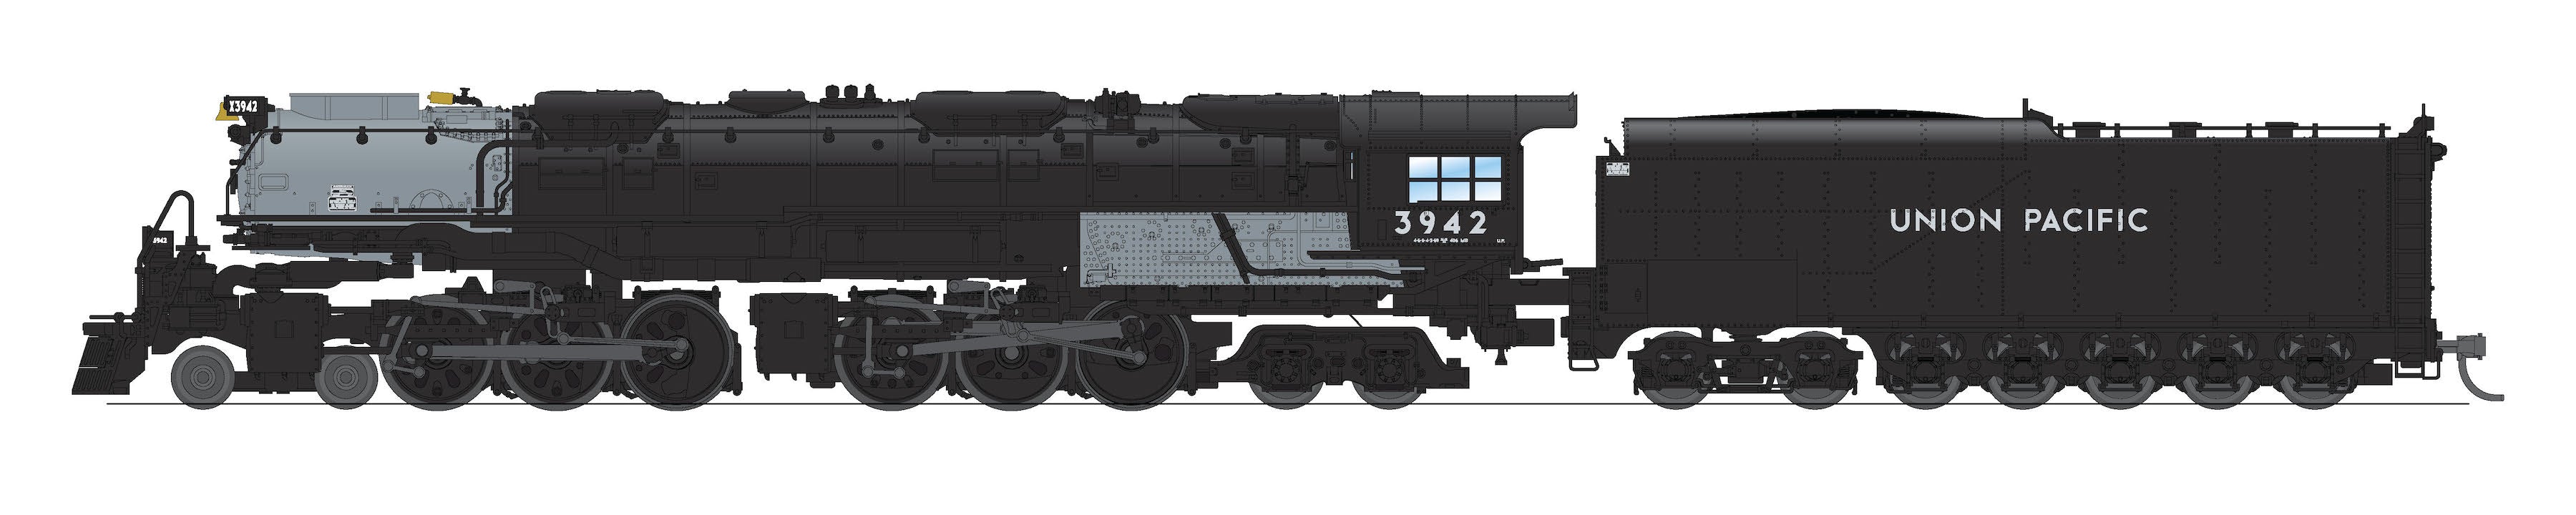 6980 UP Challenger 4-6-6-4, #3942, Black & Graphite, Coal Tender, Paragon4 Sound/DC/DCC, Smoke, N